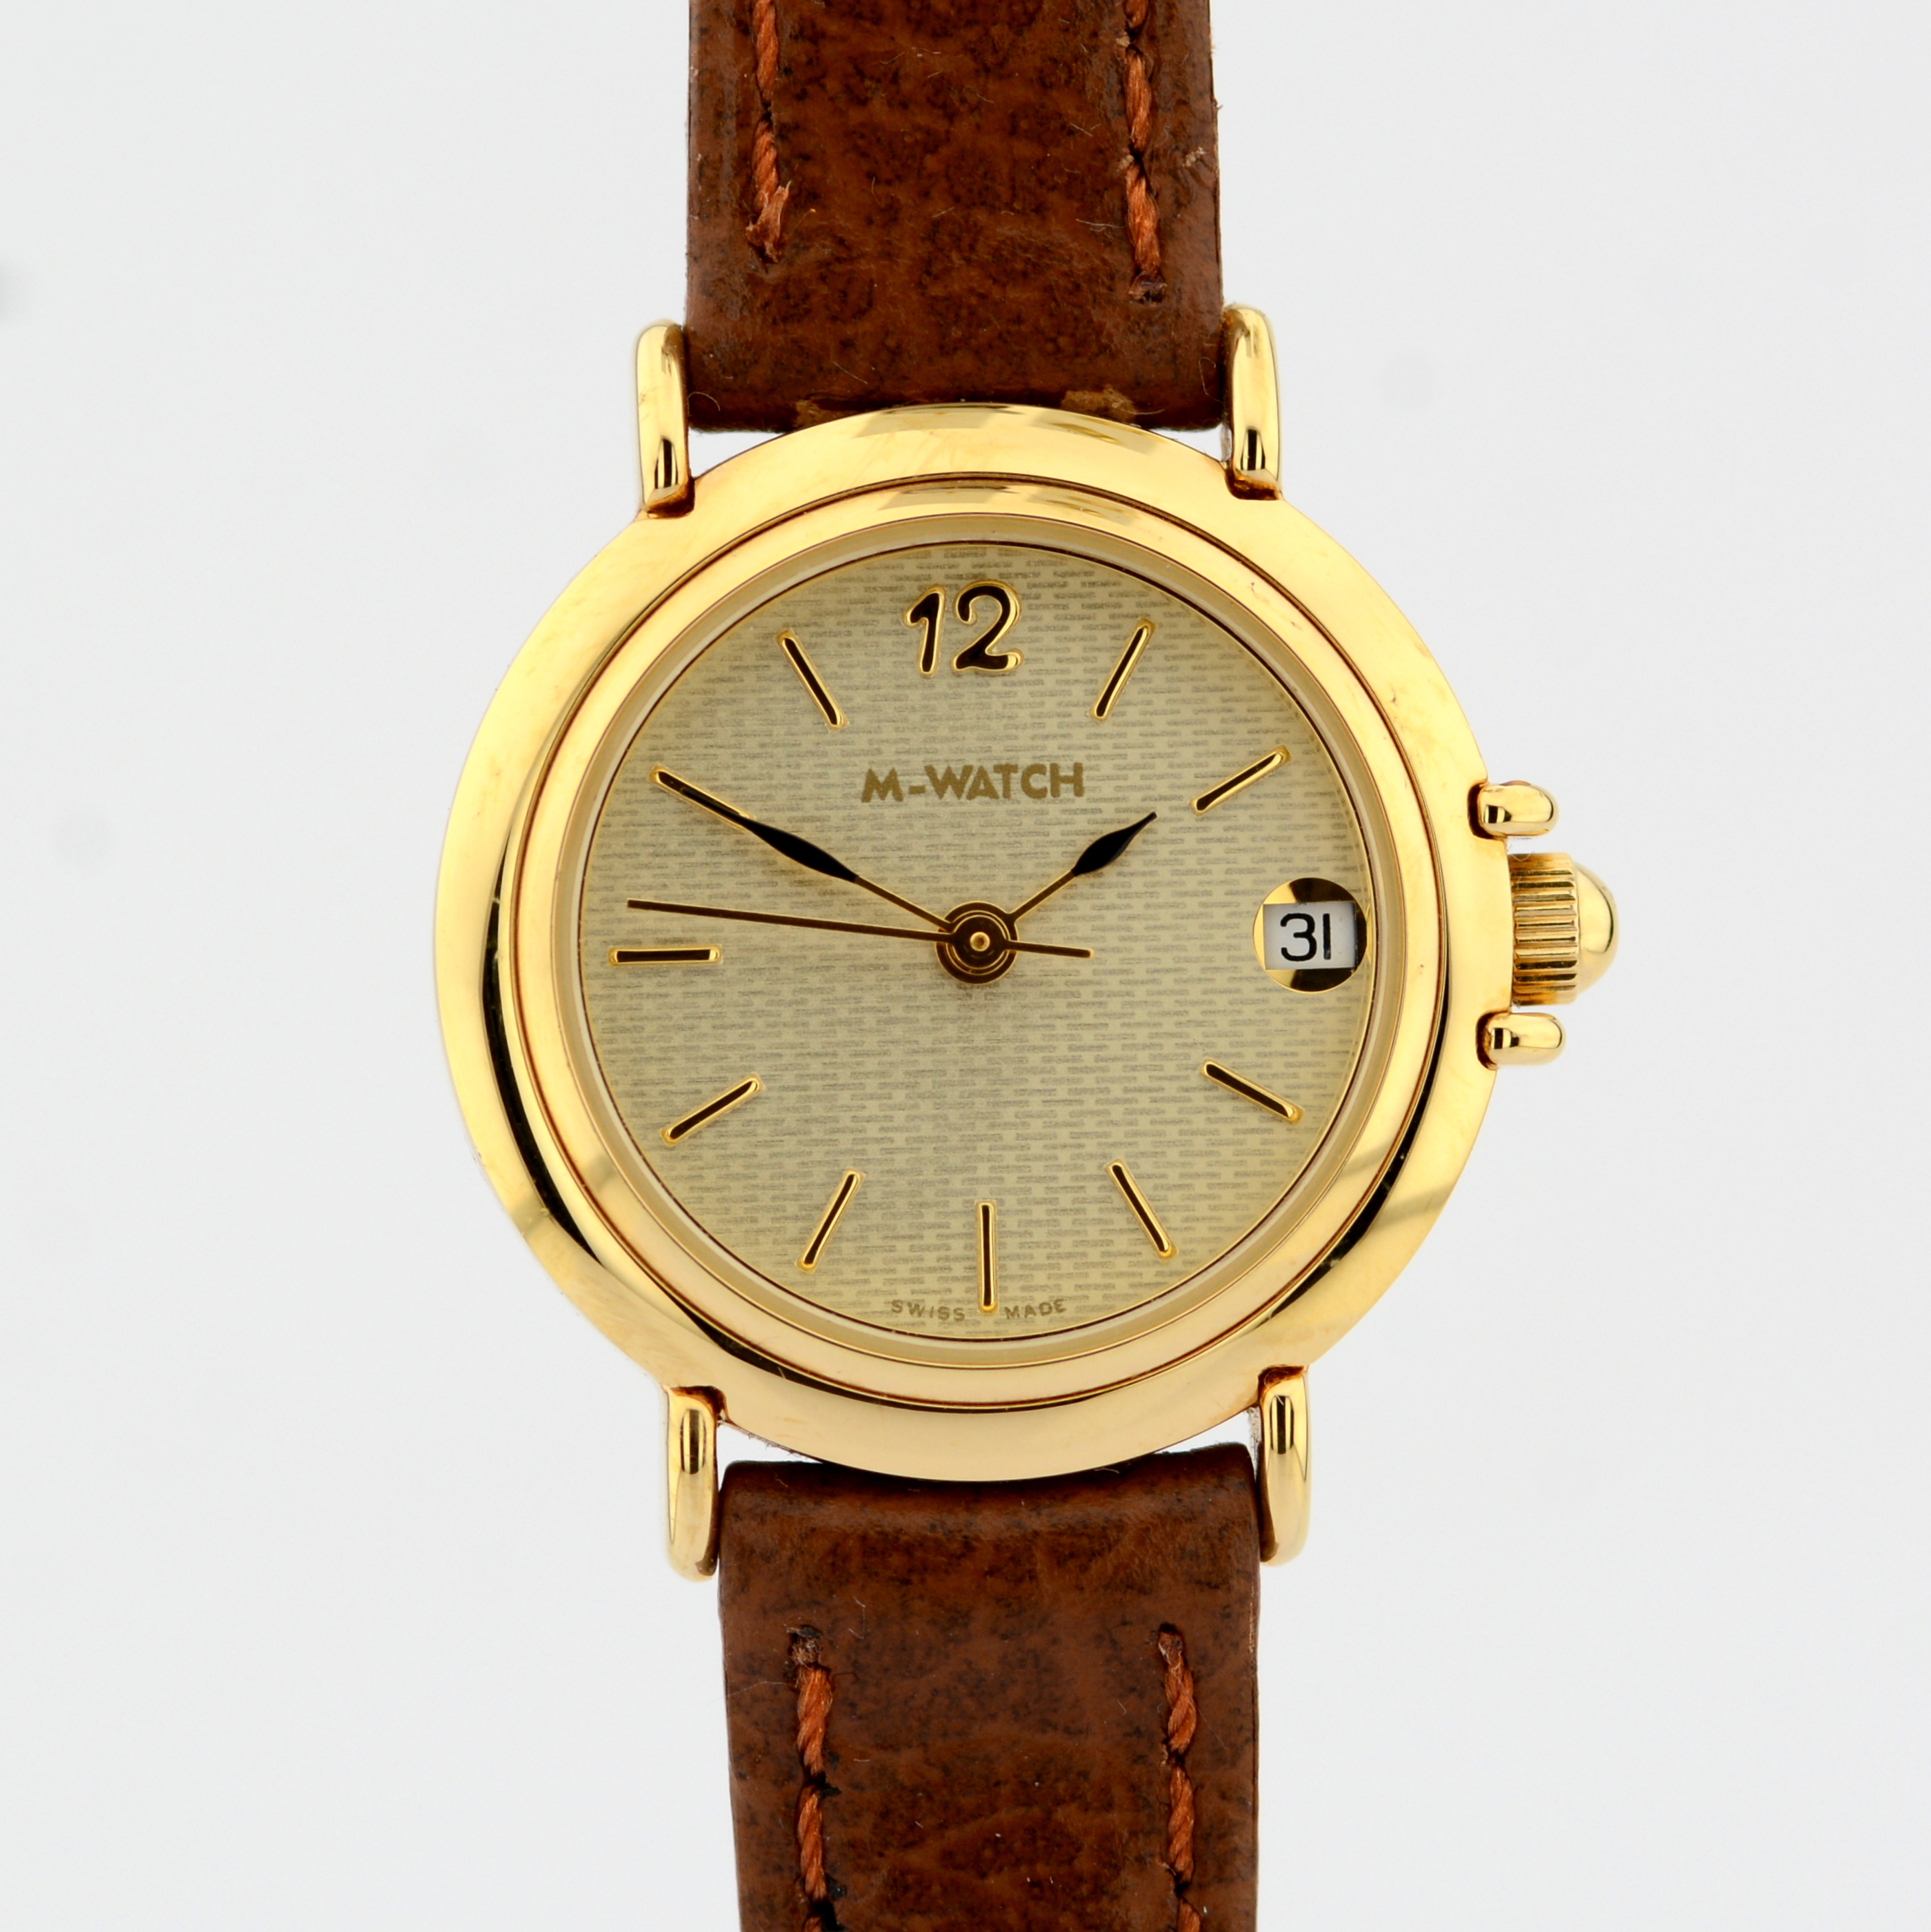 Mondaine / M-Watch - (Unworn) Gentlmen's Steel Wrist Watch - Image 2 of 7